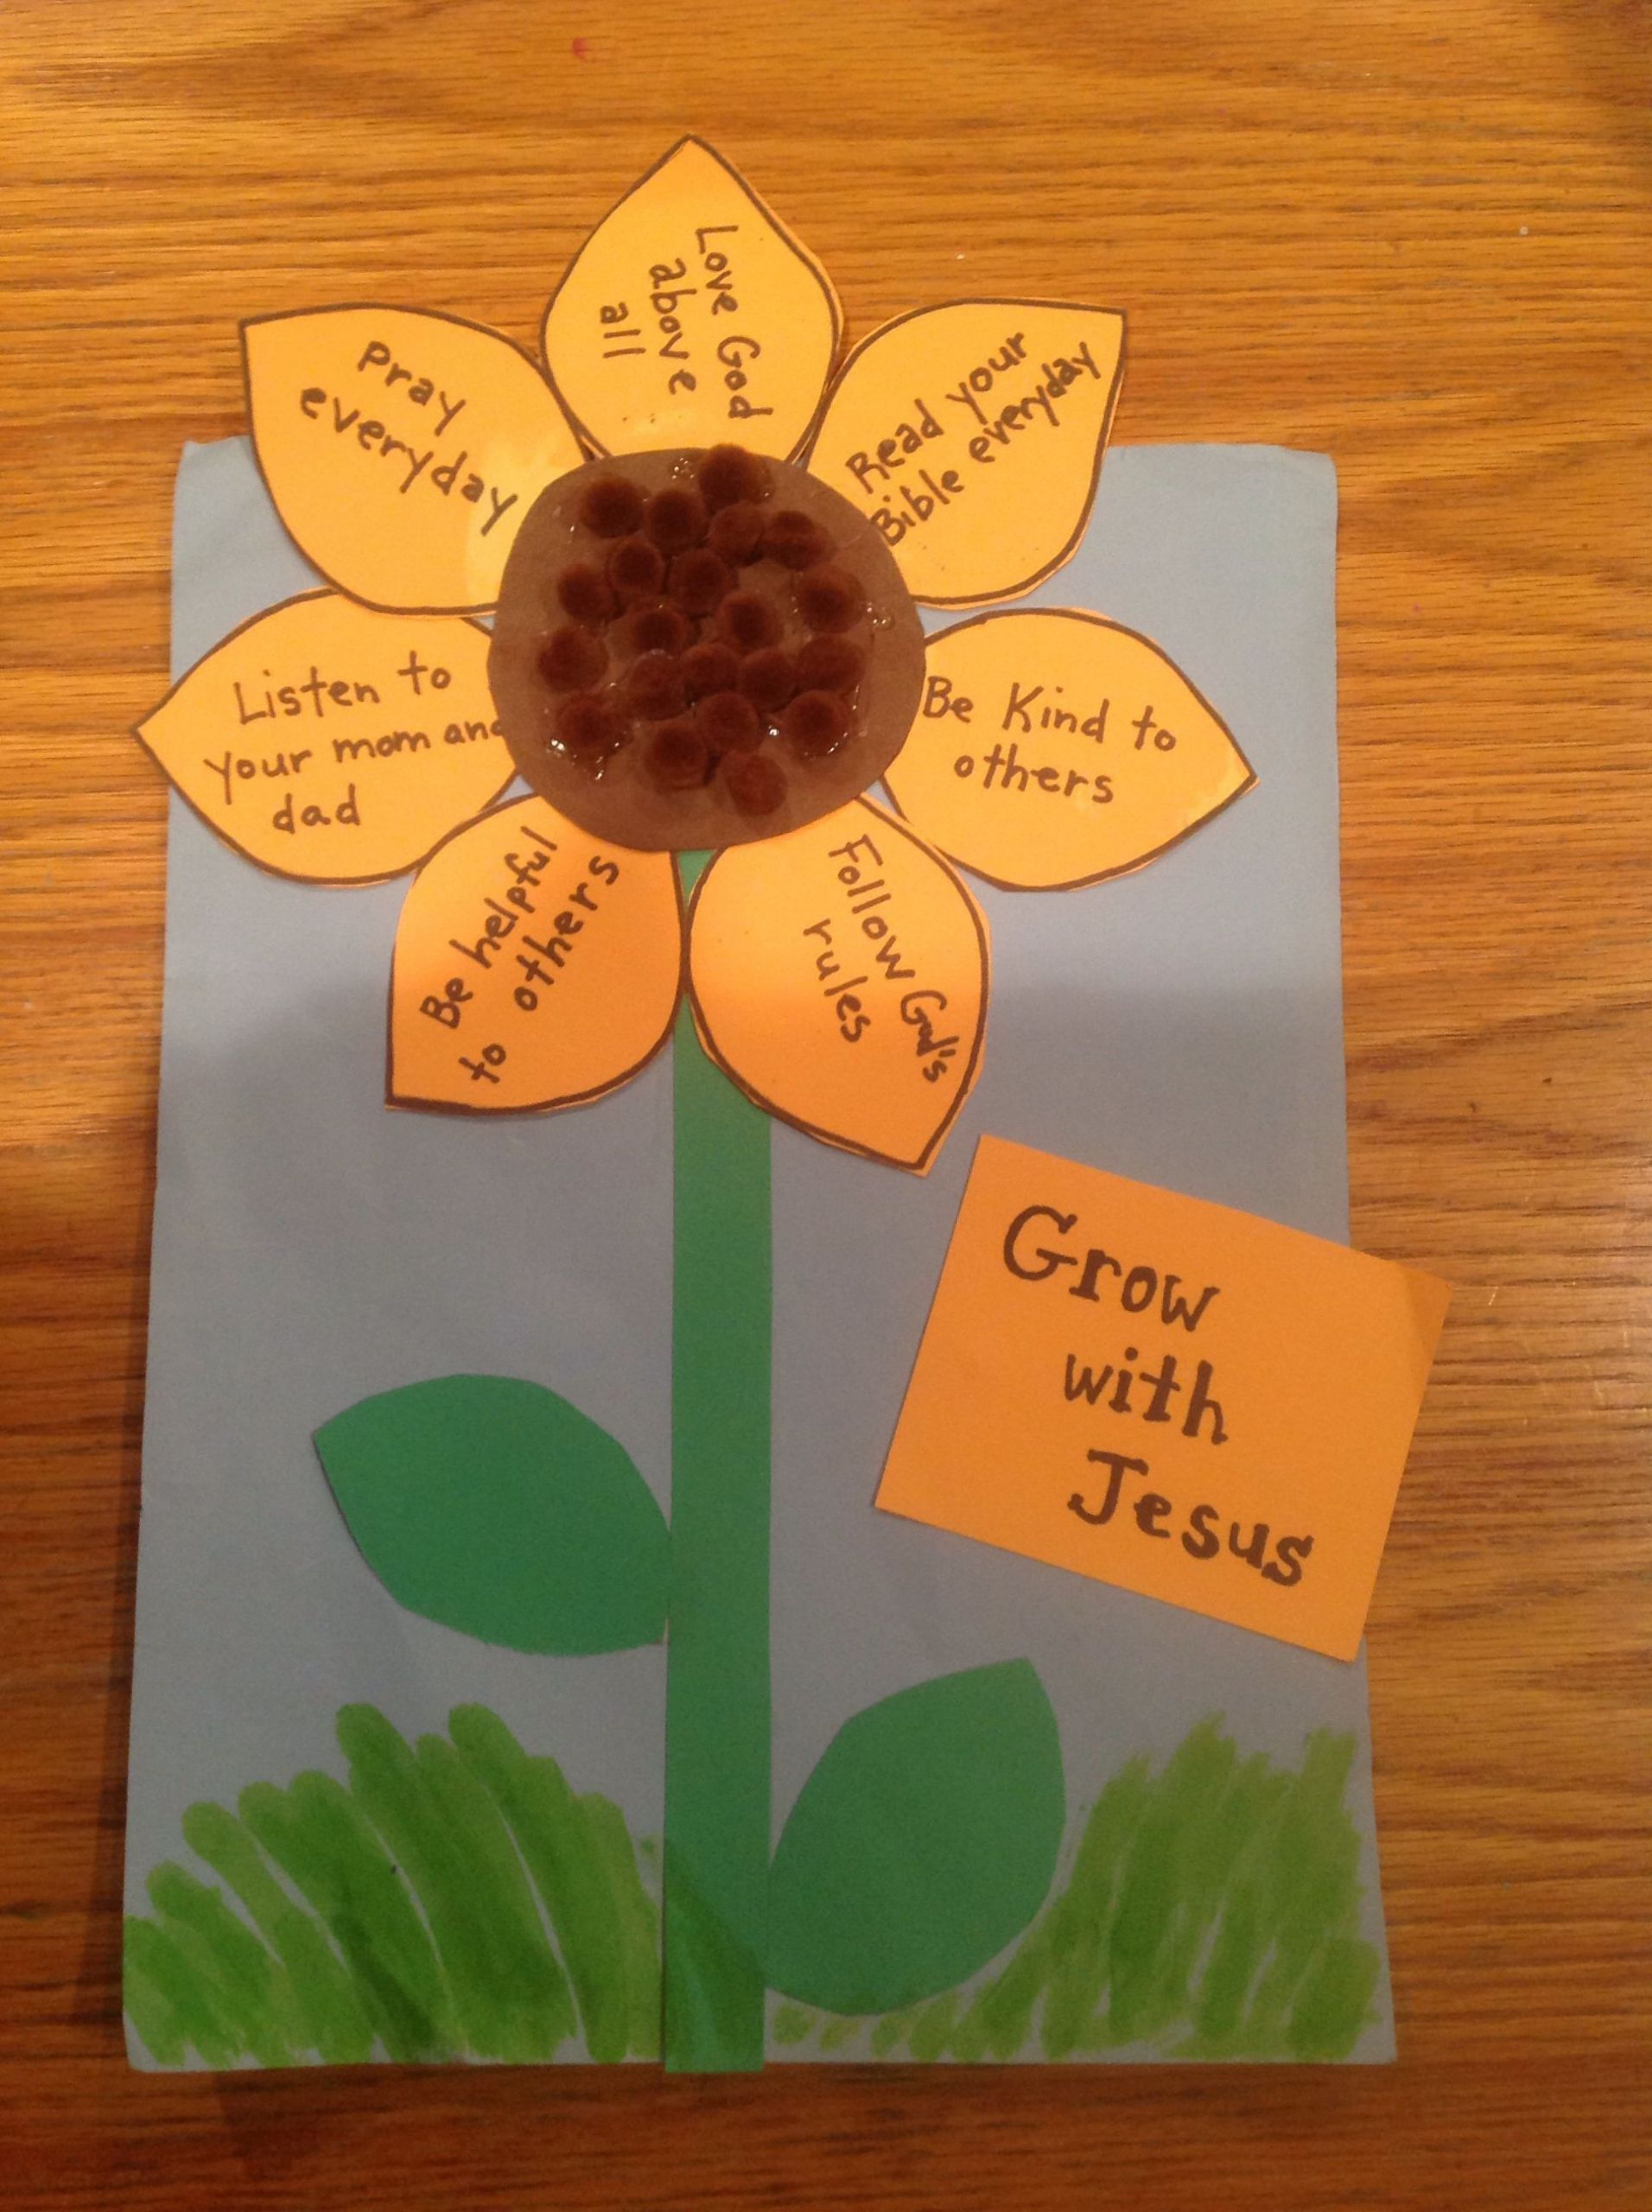 fun bible study for kids